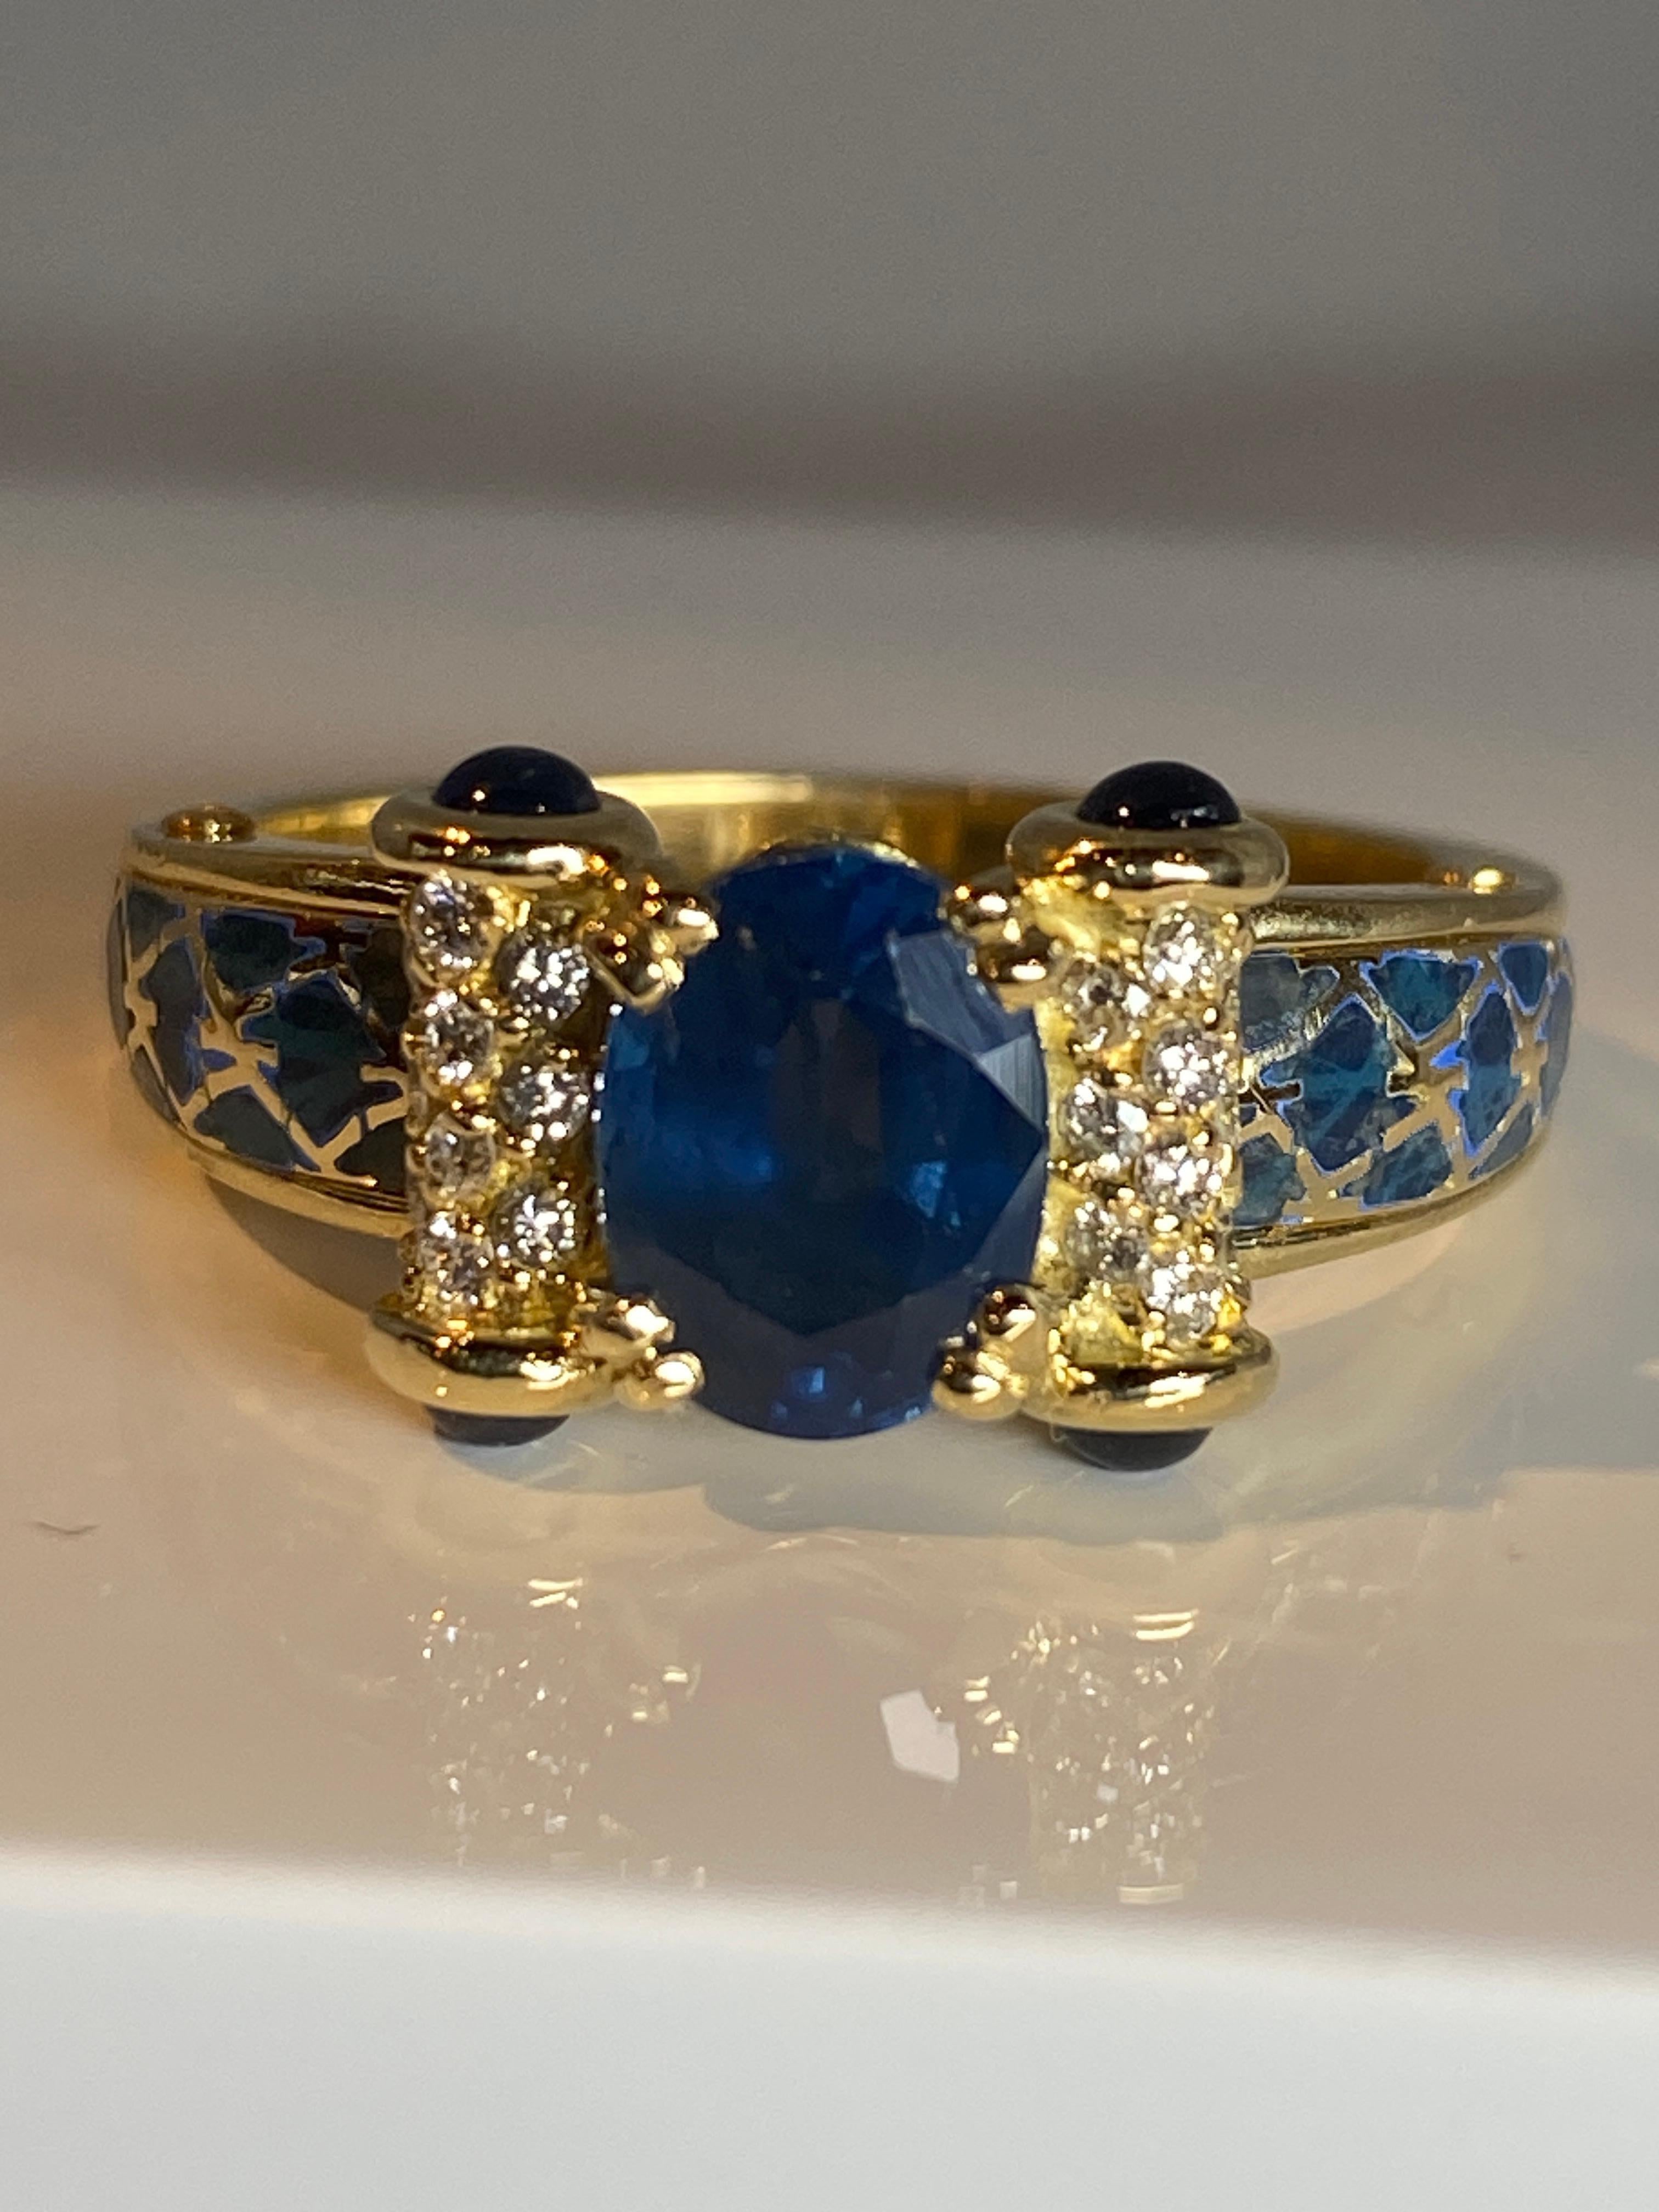 Korloff Ring in 18 Carat Gold: Sapphires, Diamonds, Blue Enamel For Sale 13